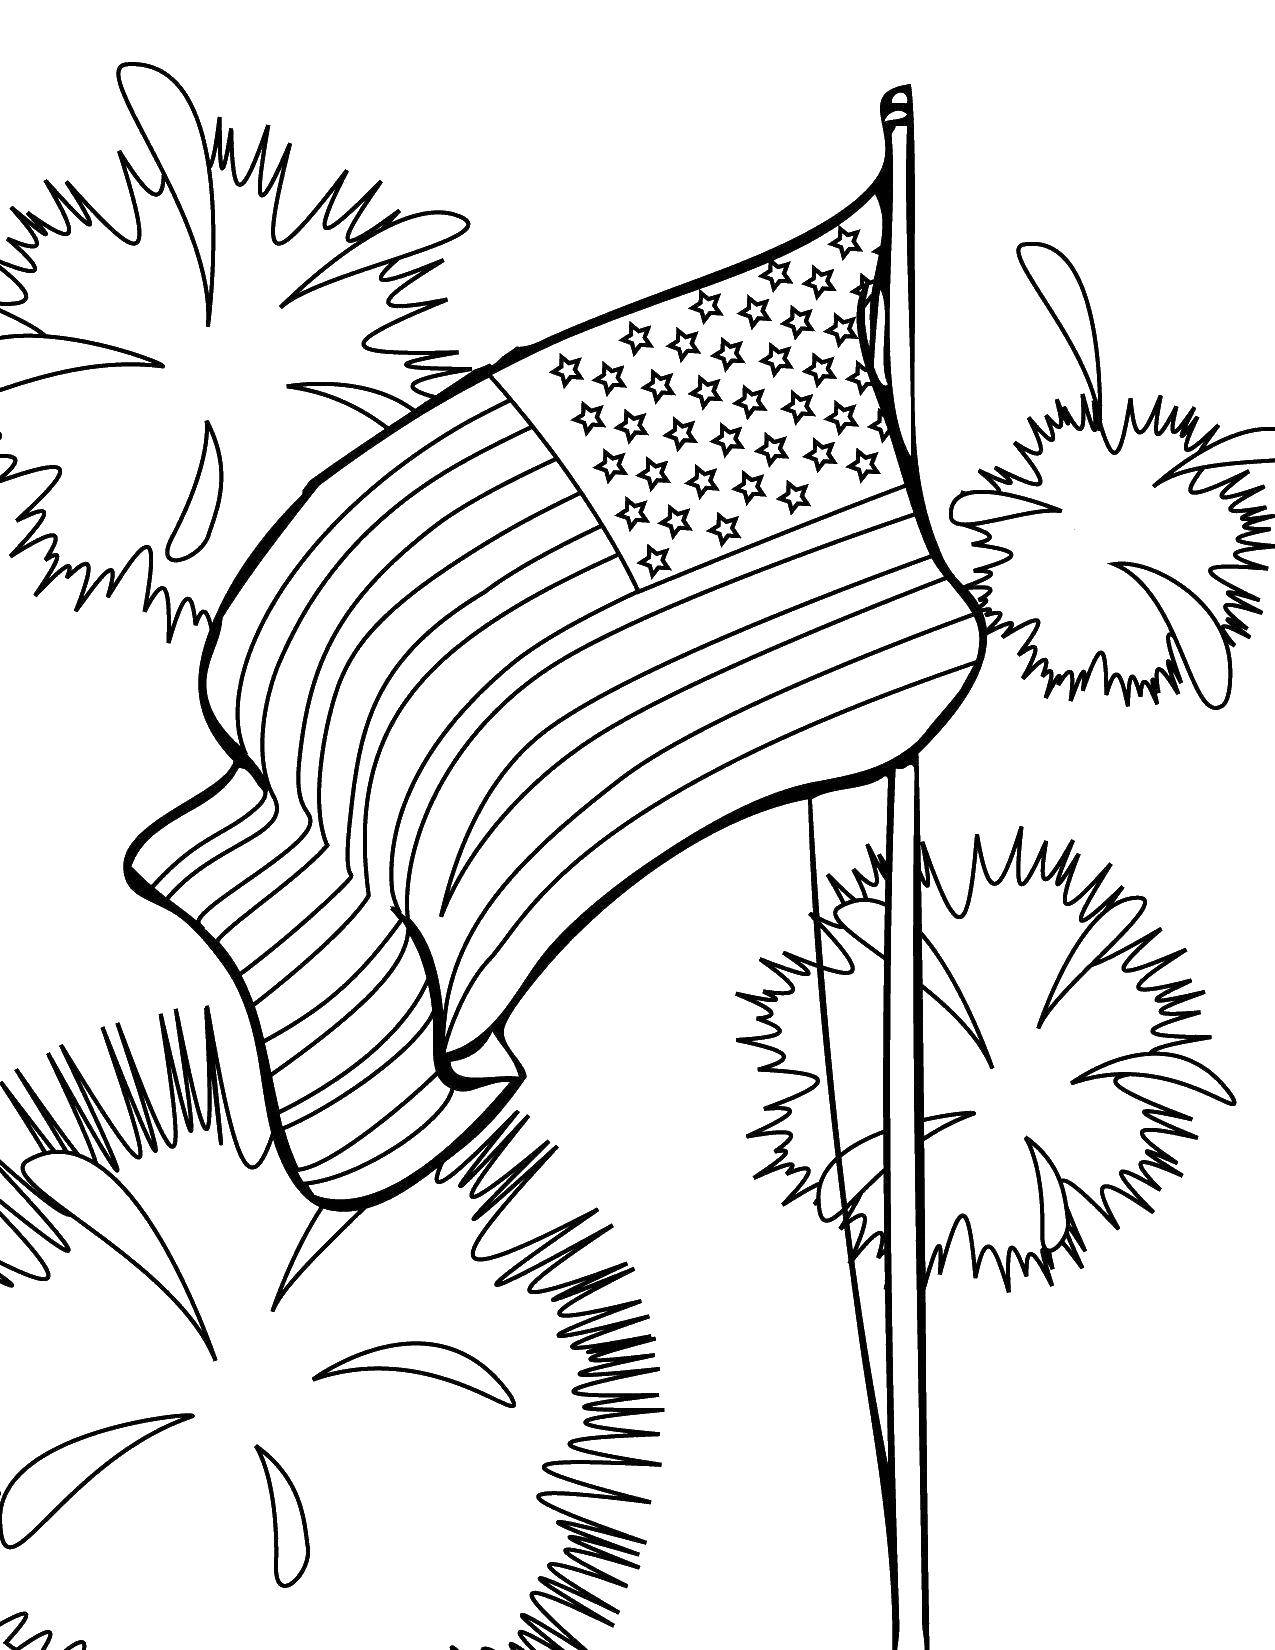 Coloring USA flag and fireworks. Category USA . Tags:  USA , flag, America, fireworks.